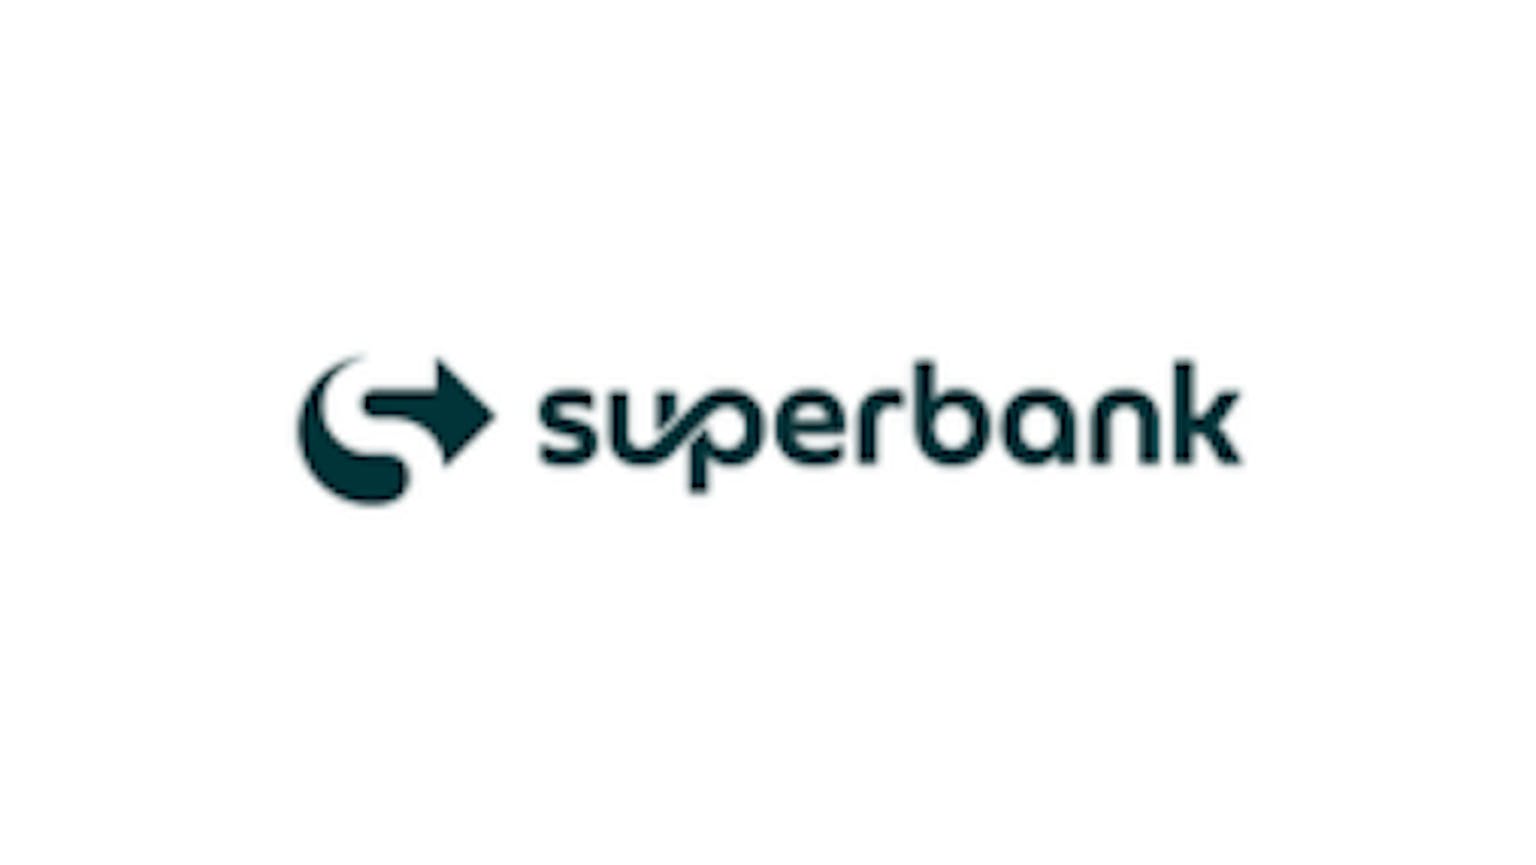 Superbank